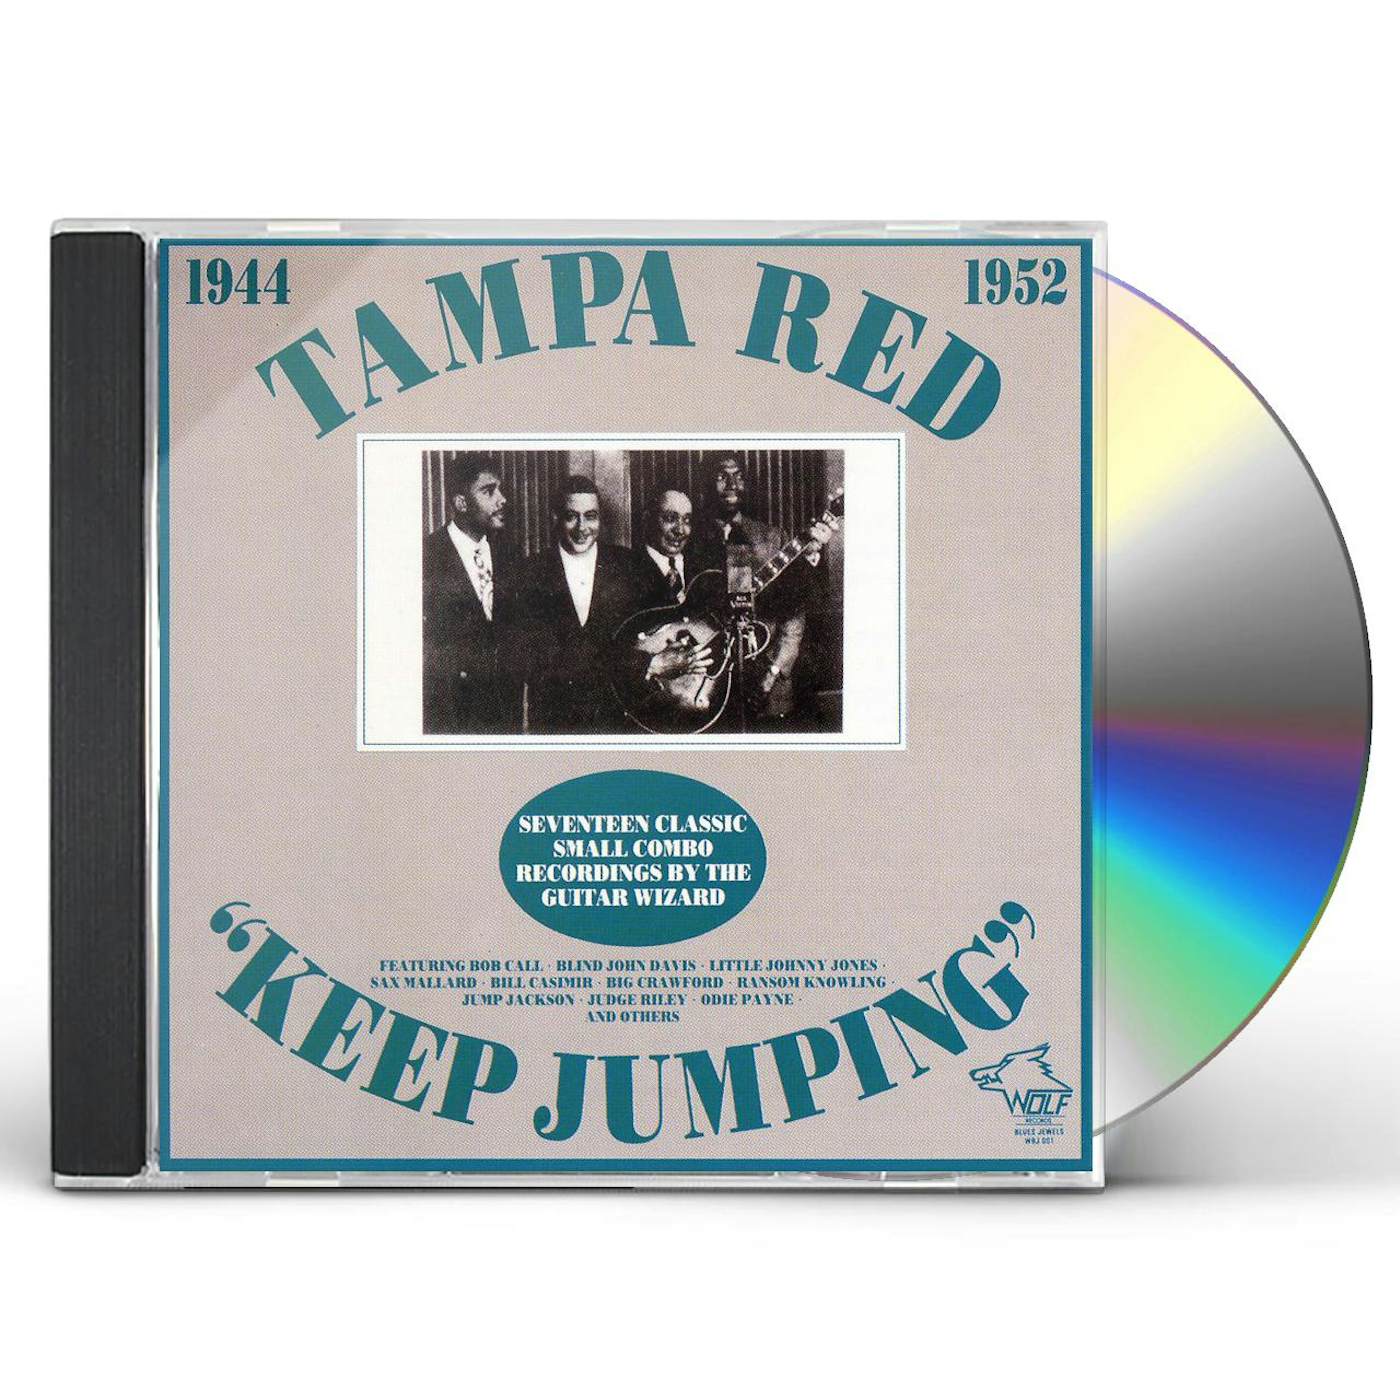 Tampa Red KEEP JUMPING CD